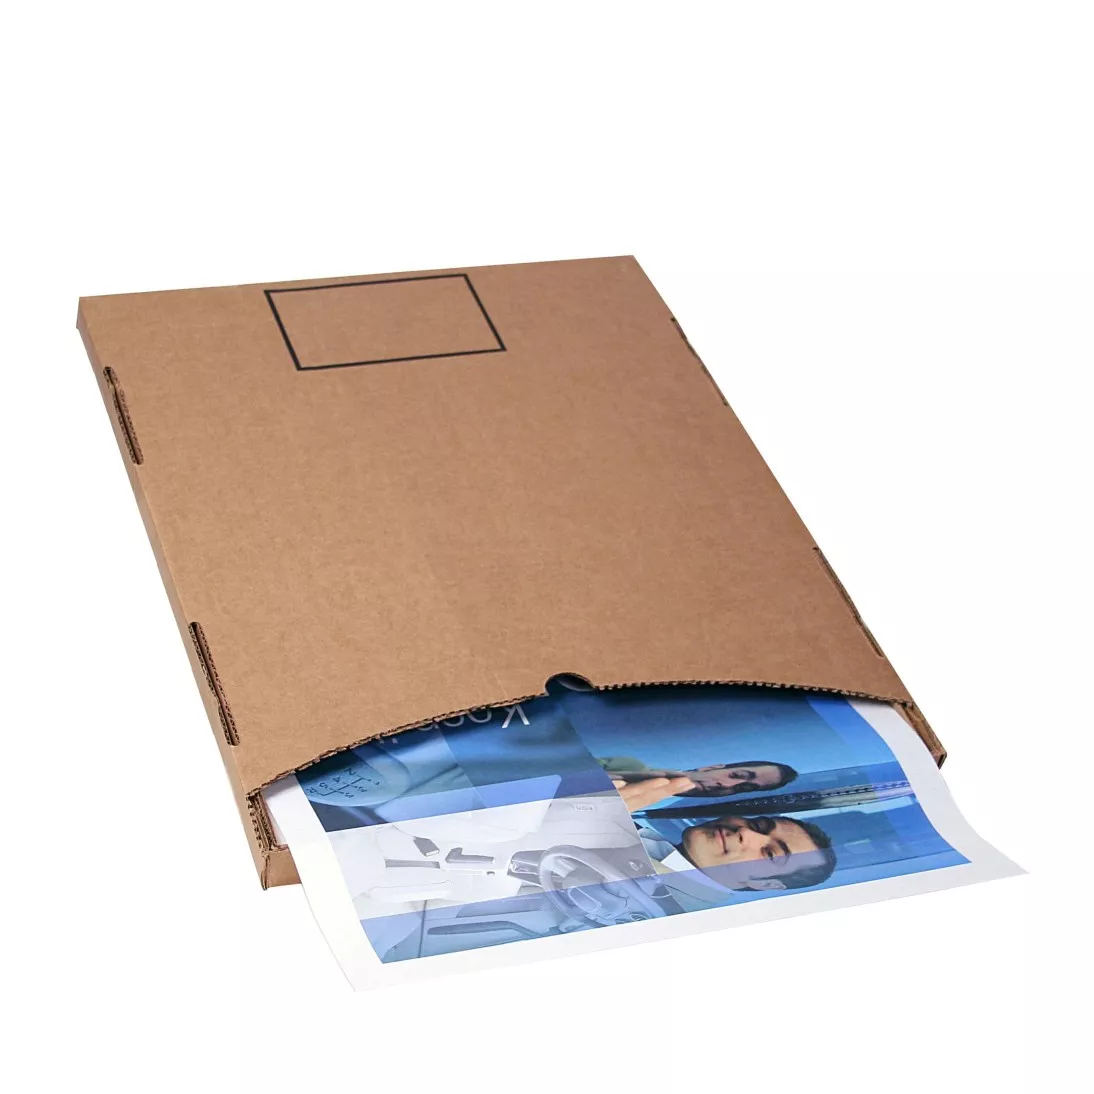 3M™ Interior Protection Automotive Floor Mat, 36901, 250 per box, 1 box
per case